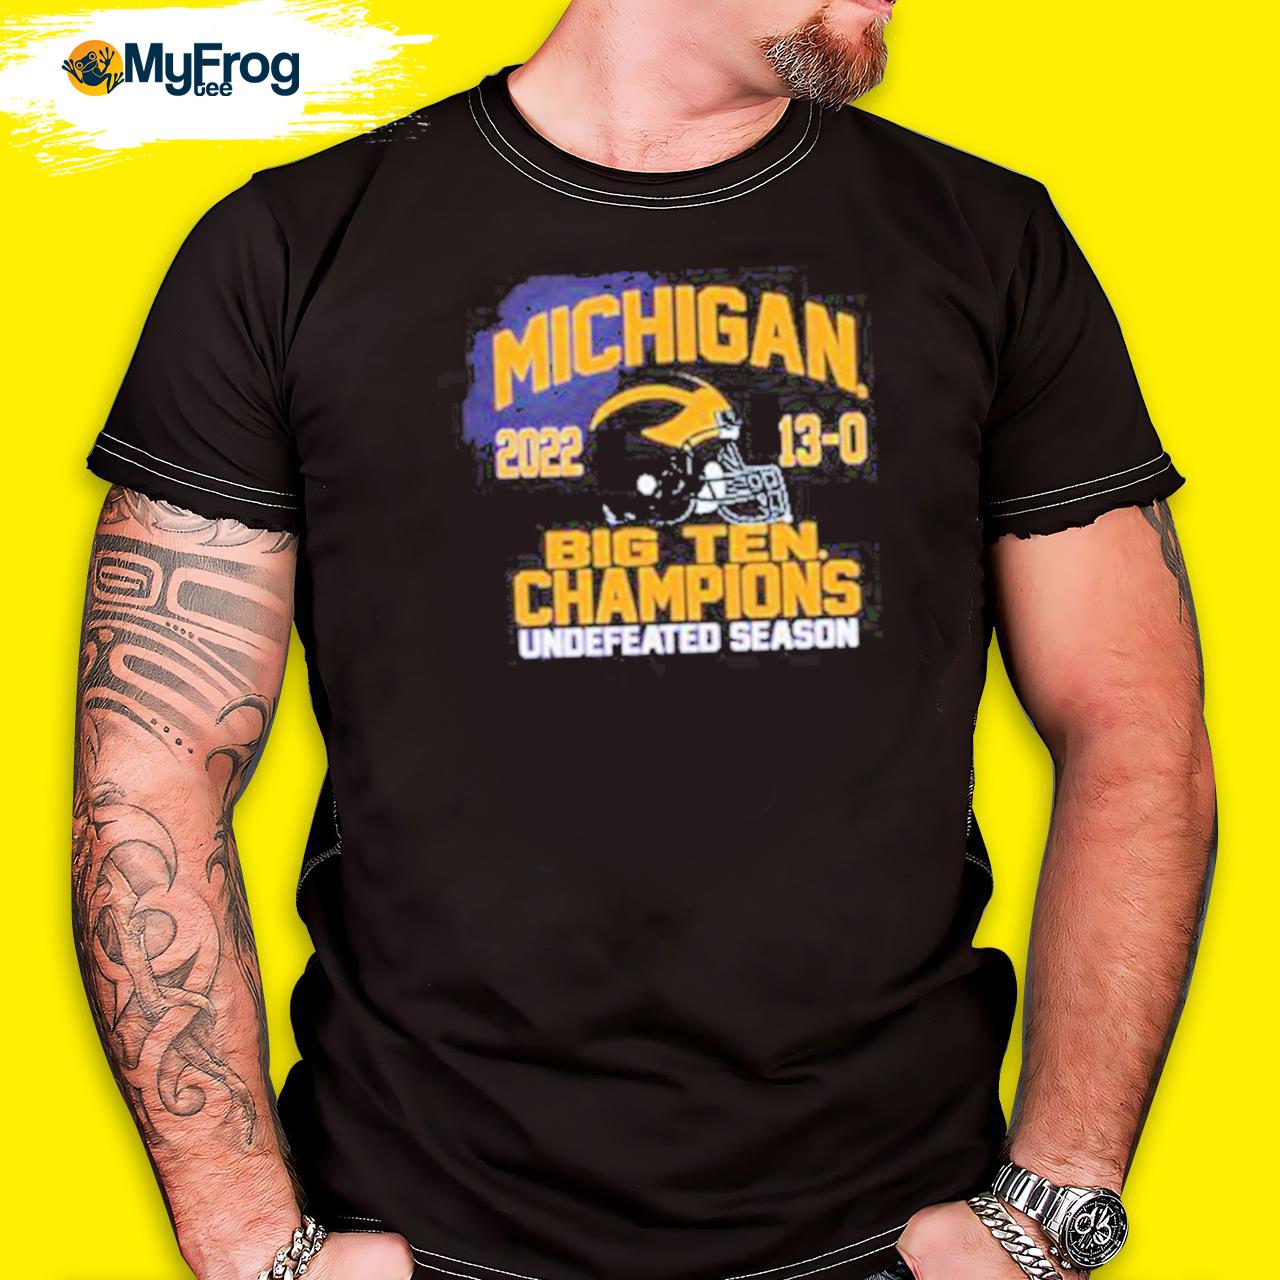 Michigan 2022 Big Ten Champions Undefeated Season shirt